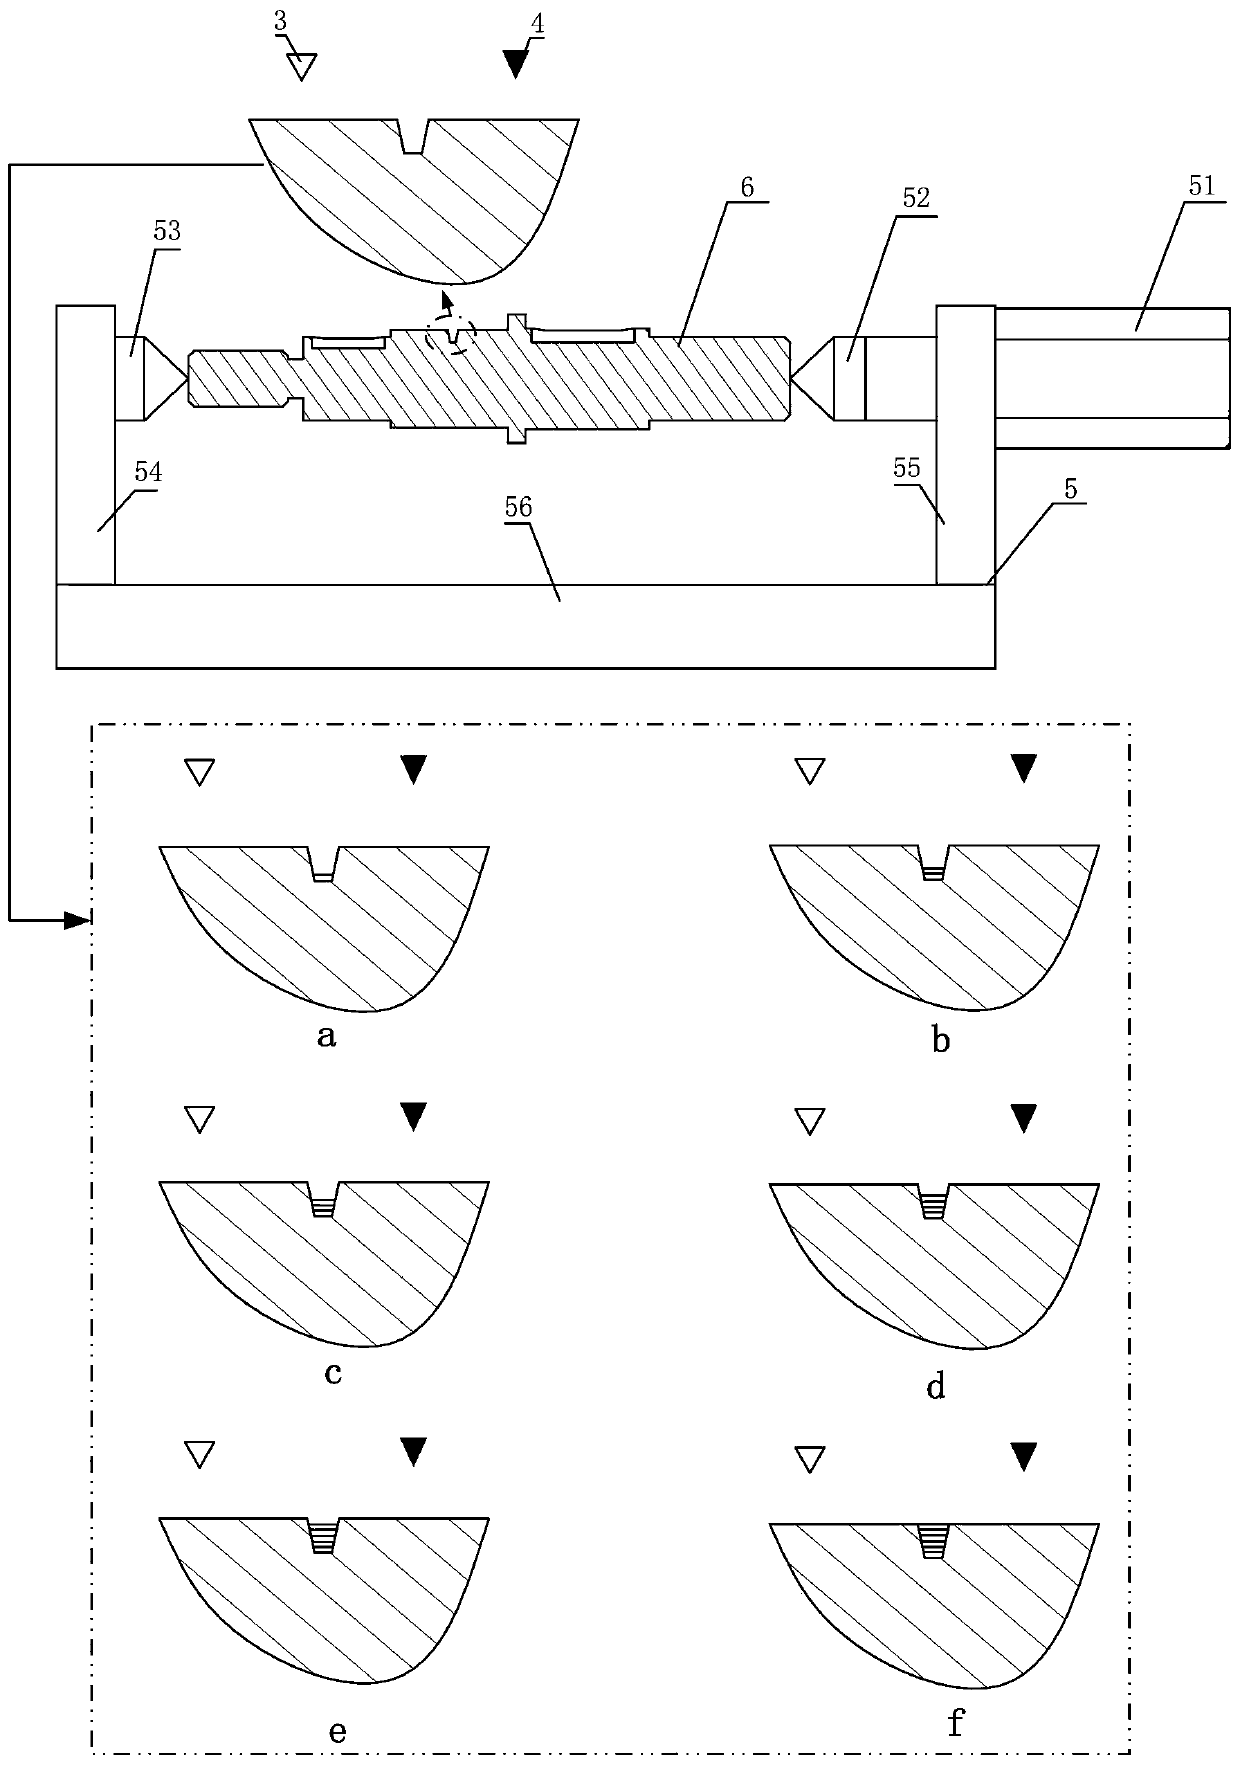 Transmission shaft torsional vibration crack welding system and method fused laser machining and 3D printing